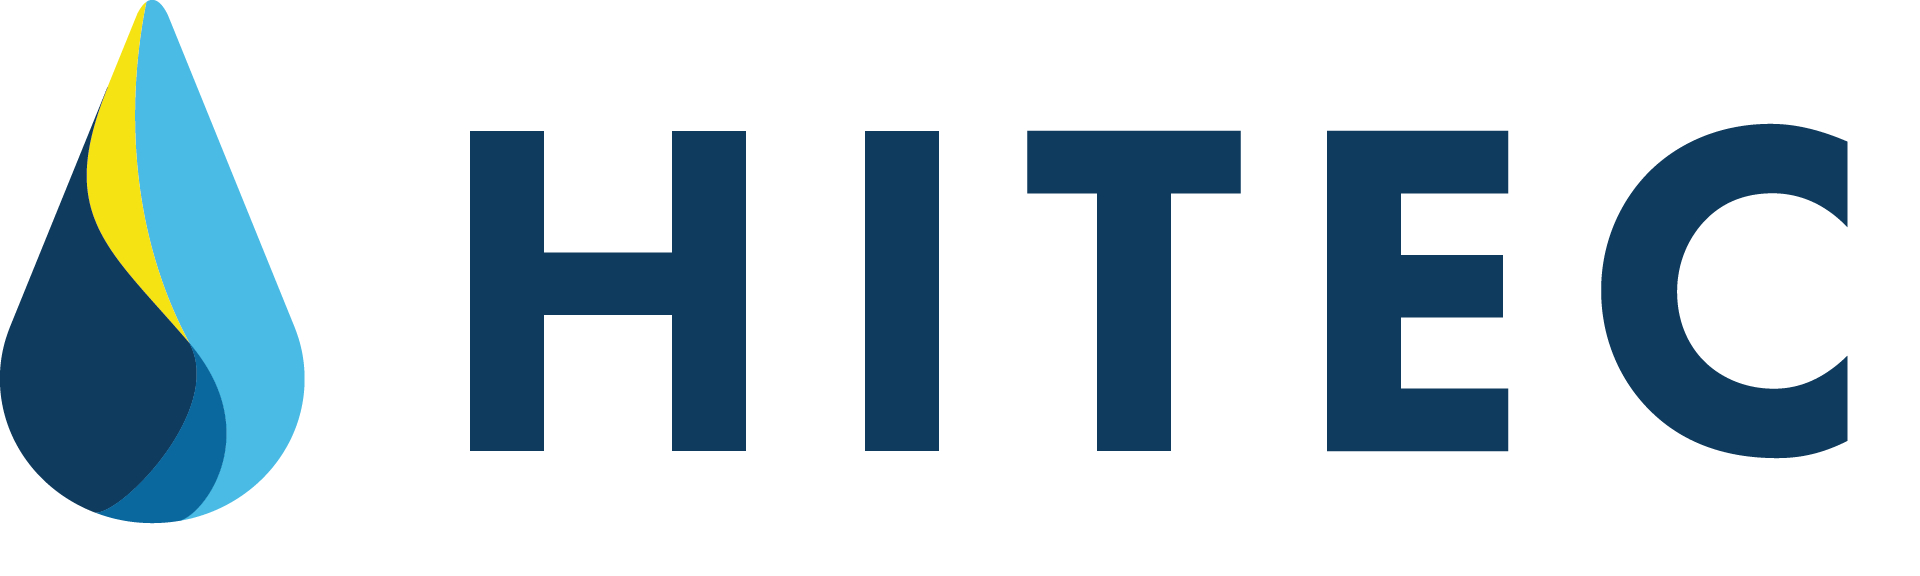 Logo de HITEC